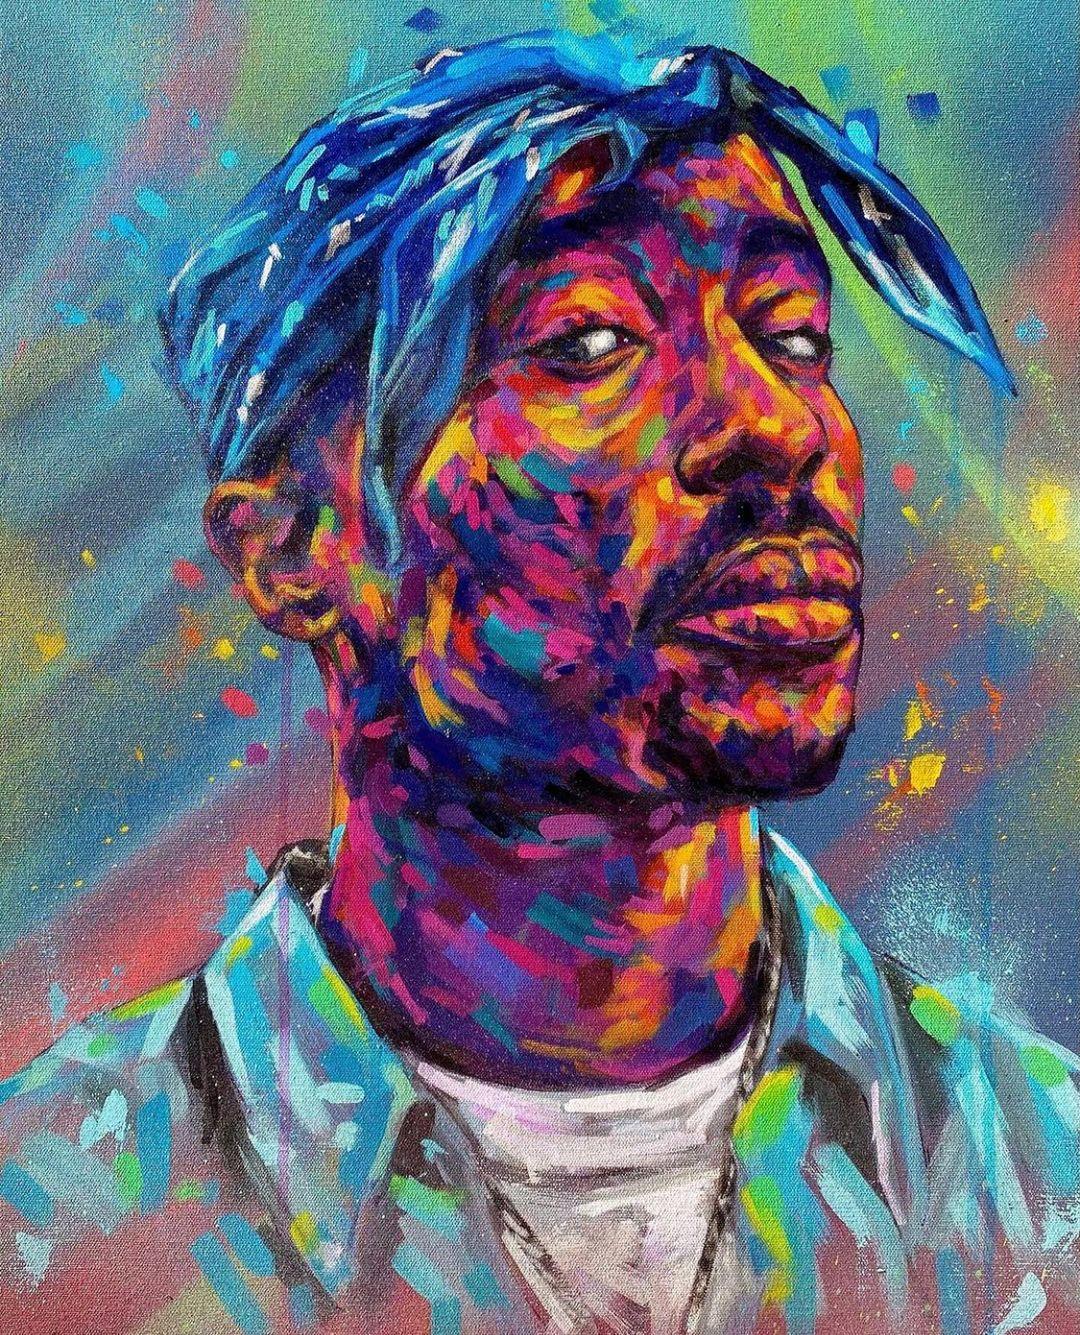 A photo art showing Tupac Shakur’s face.